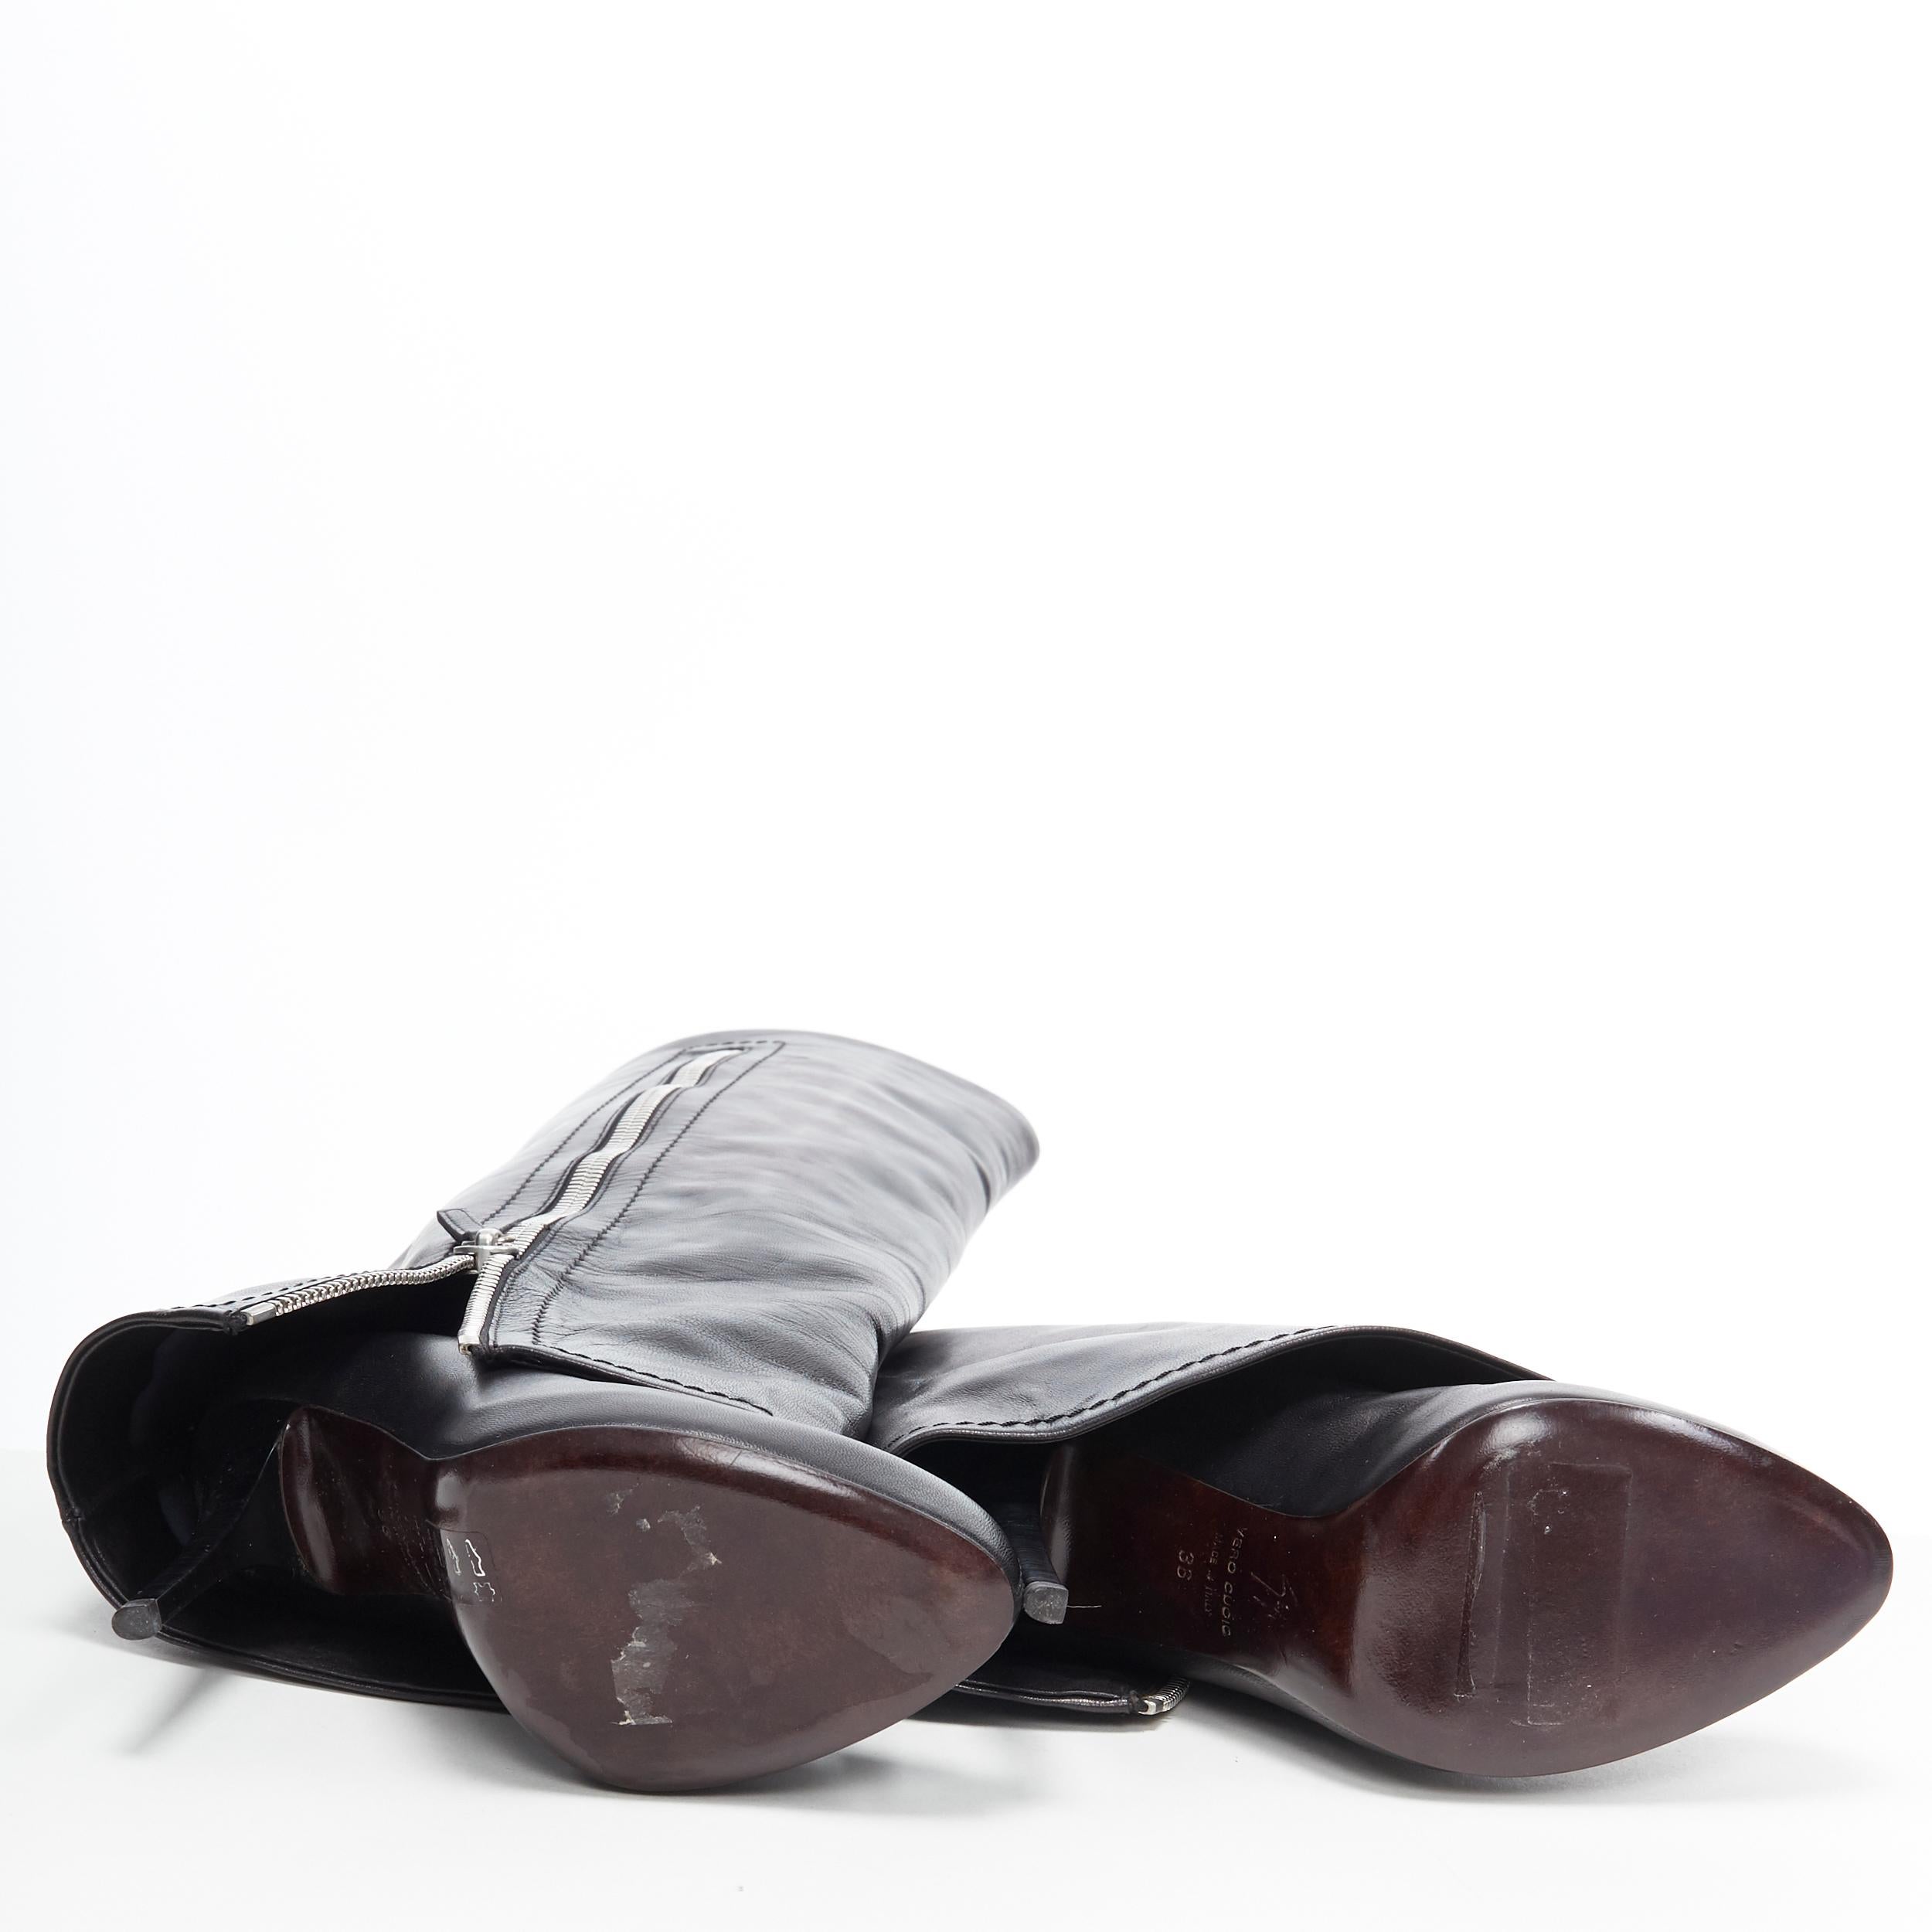 new GIUSEPPE ZANOTTI black leather zipper foldover pant high heel boot EU36 1